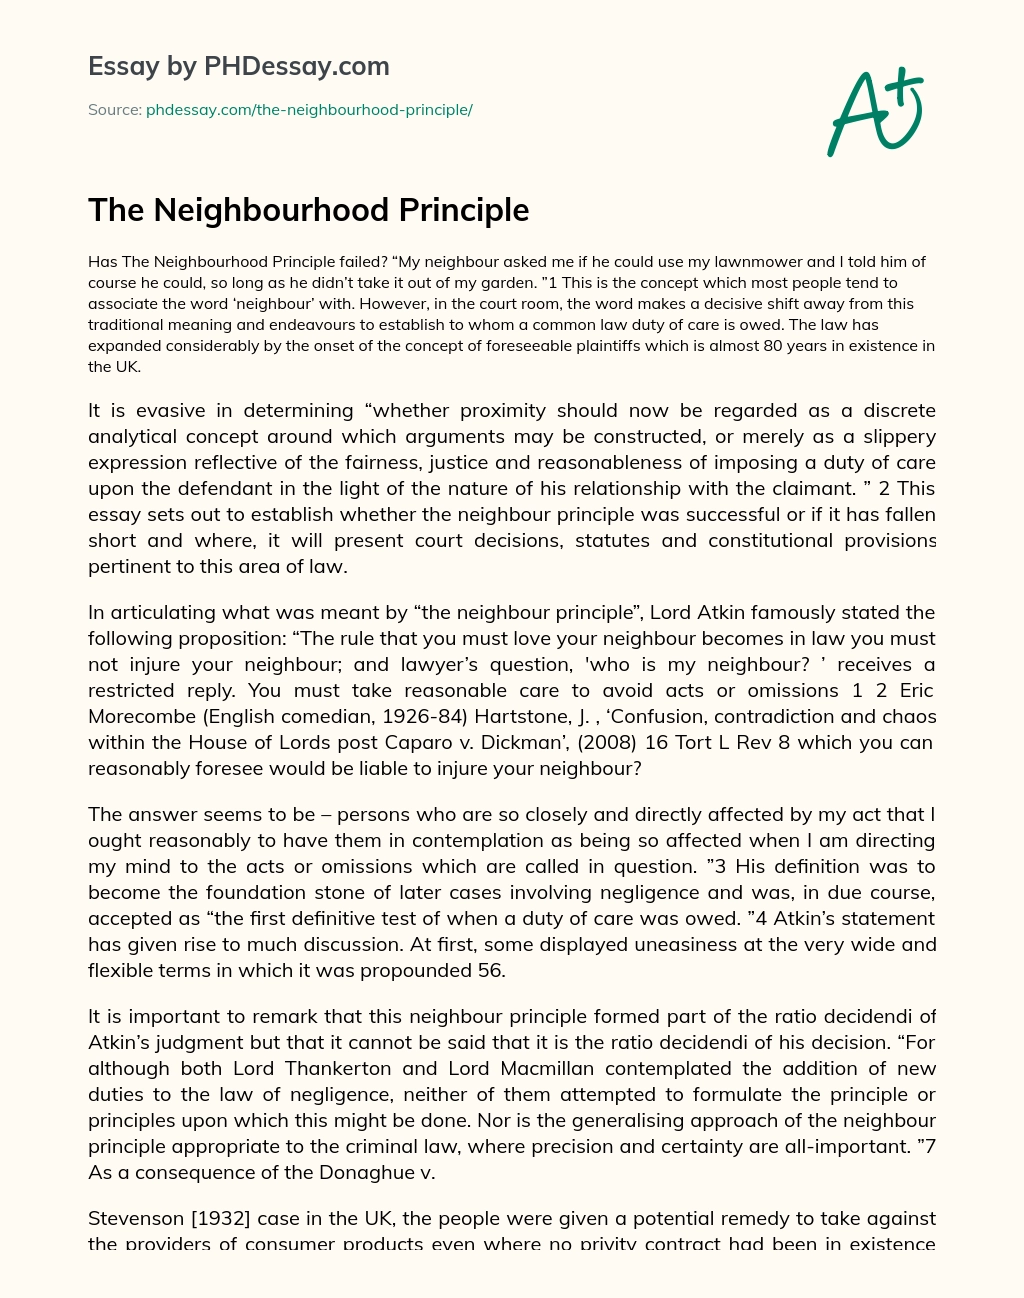 The Neighbourhood Principle essay